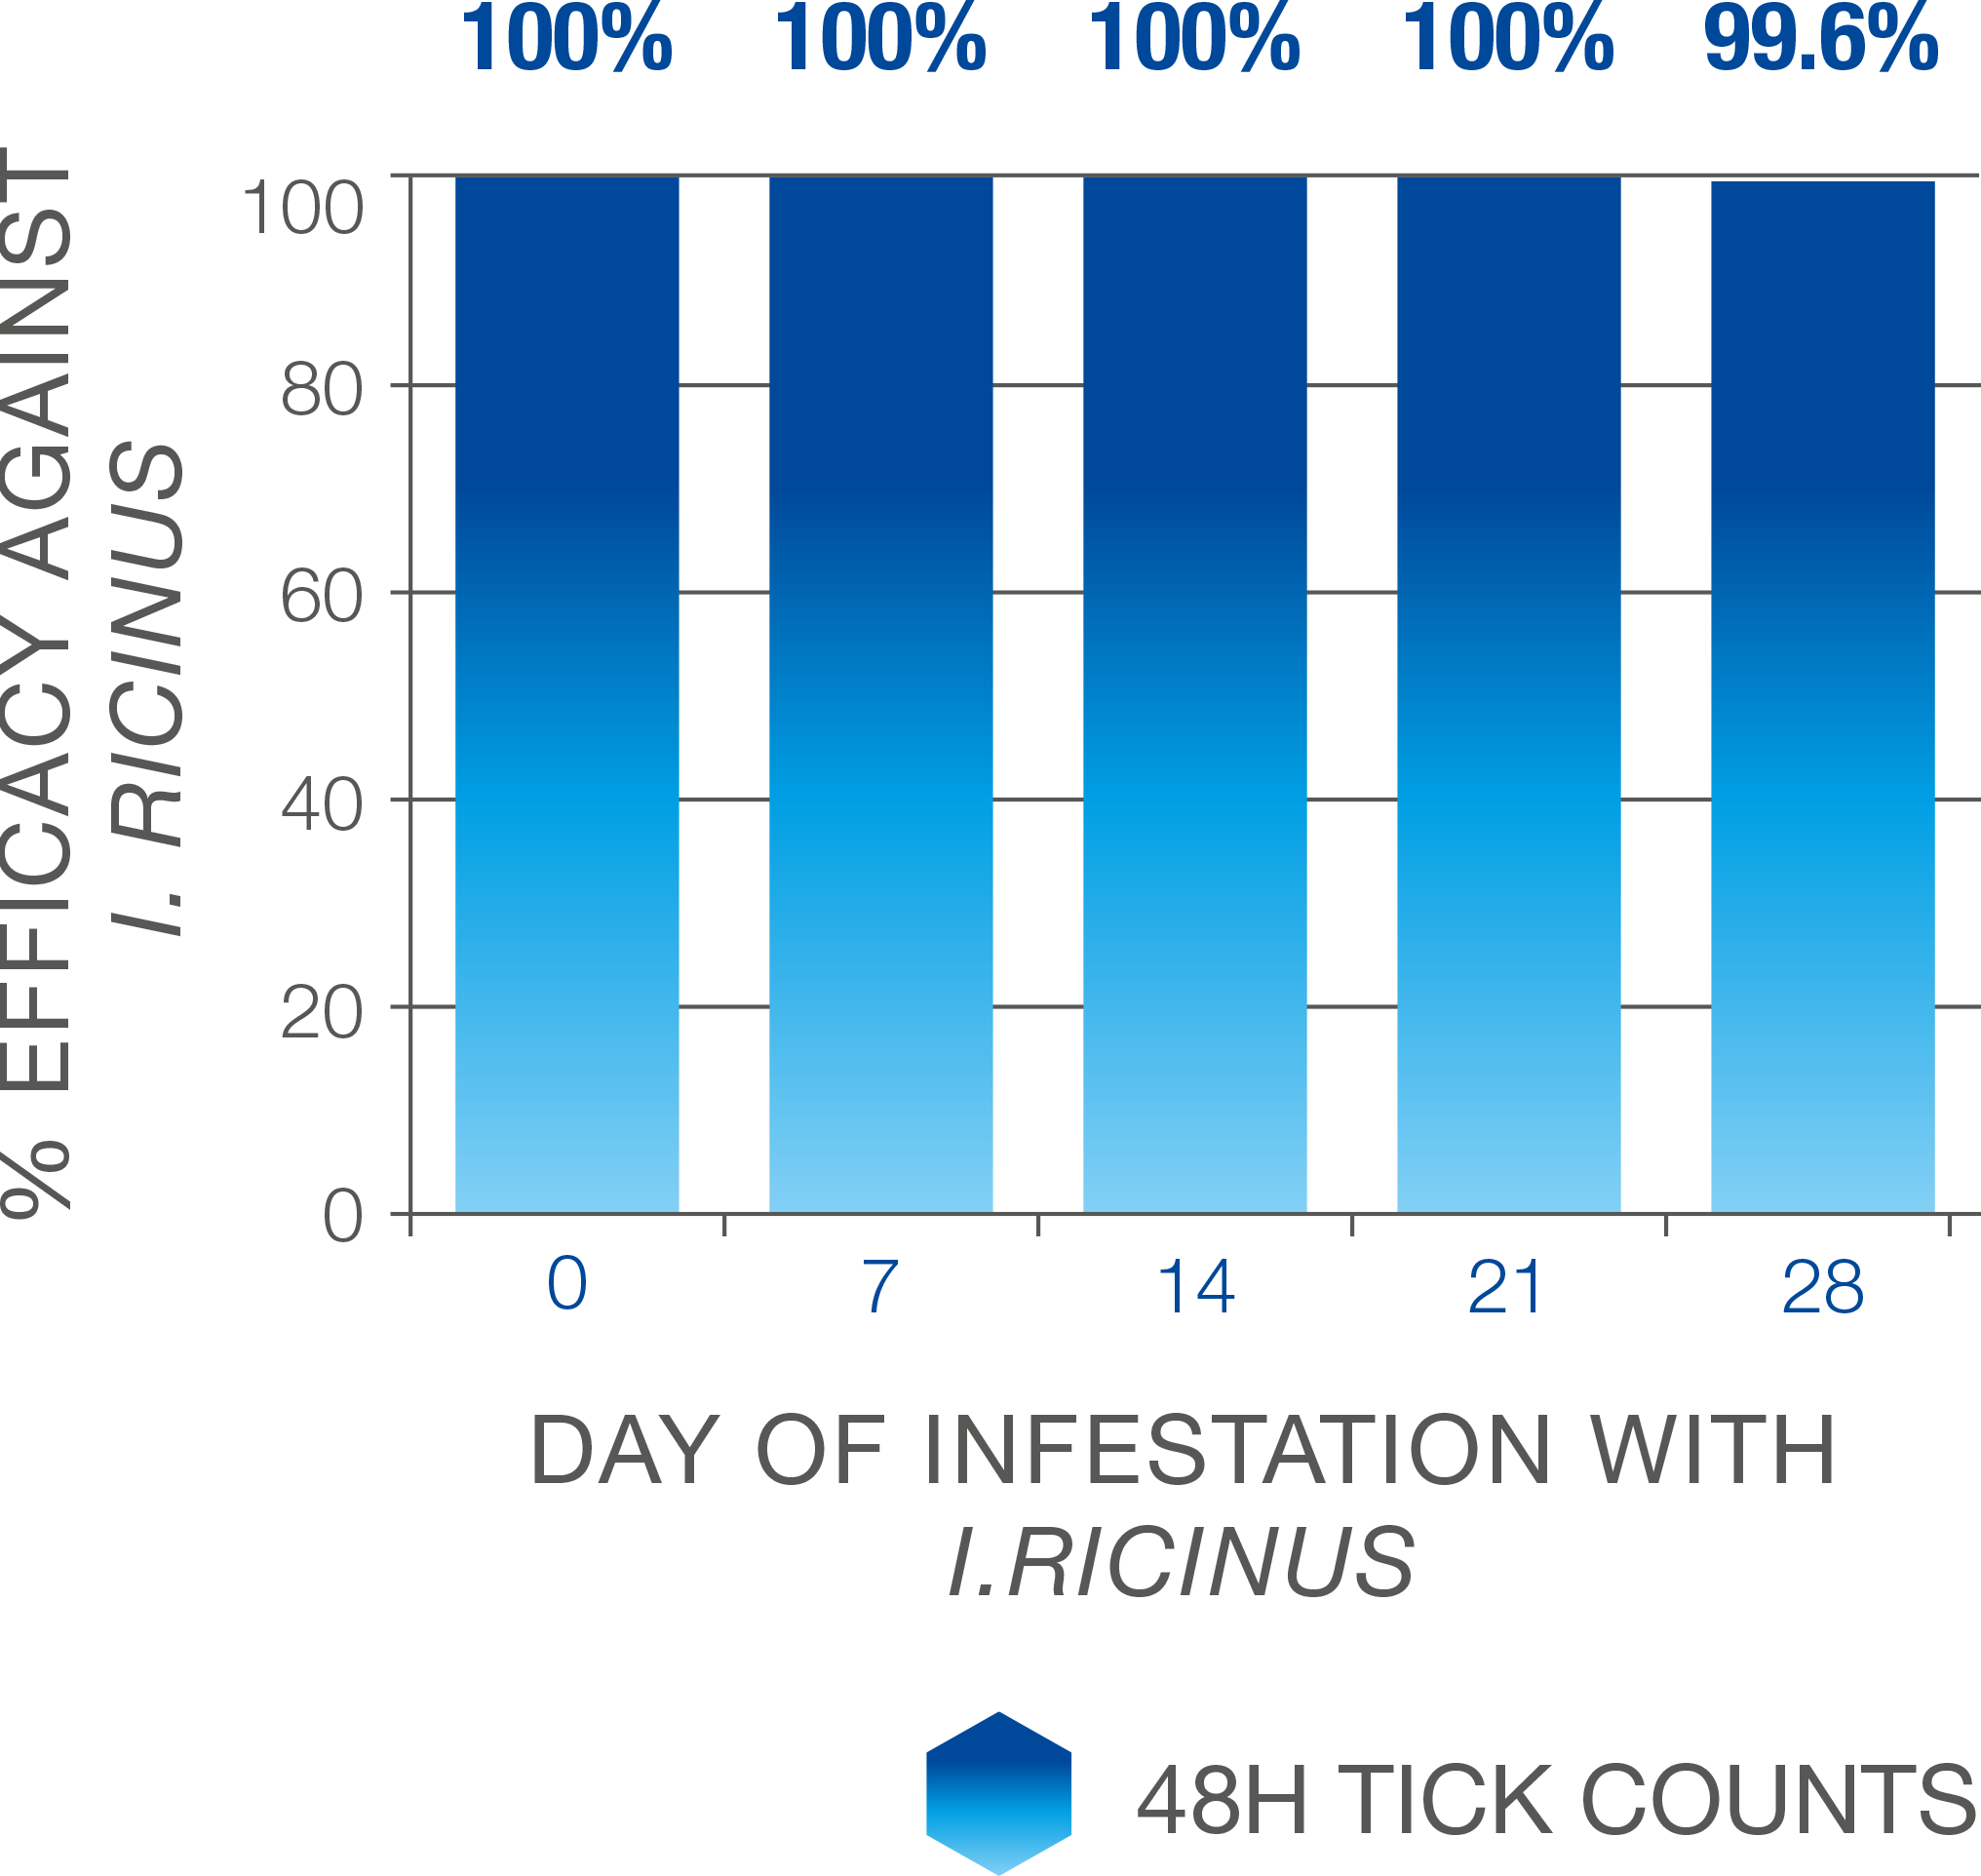 Tabela koja pokazuje procentualnu efikanost afoksolanera protiv krpelja ixodes ricinus u prvom danu (100%), nakon 7 dana (100%), nakon 14 dana (100%), nakon 21 dan (100%) i nakon 28 dana (99.6%).